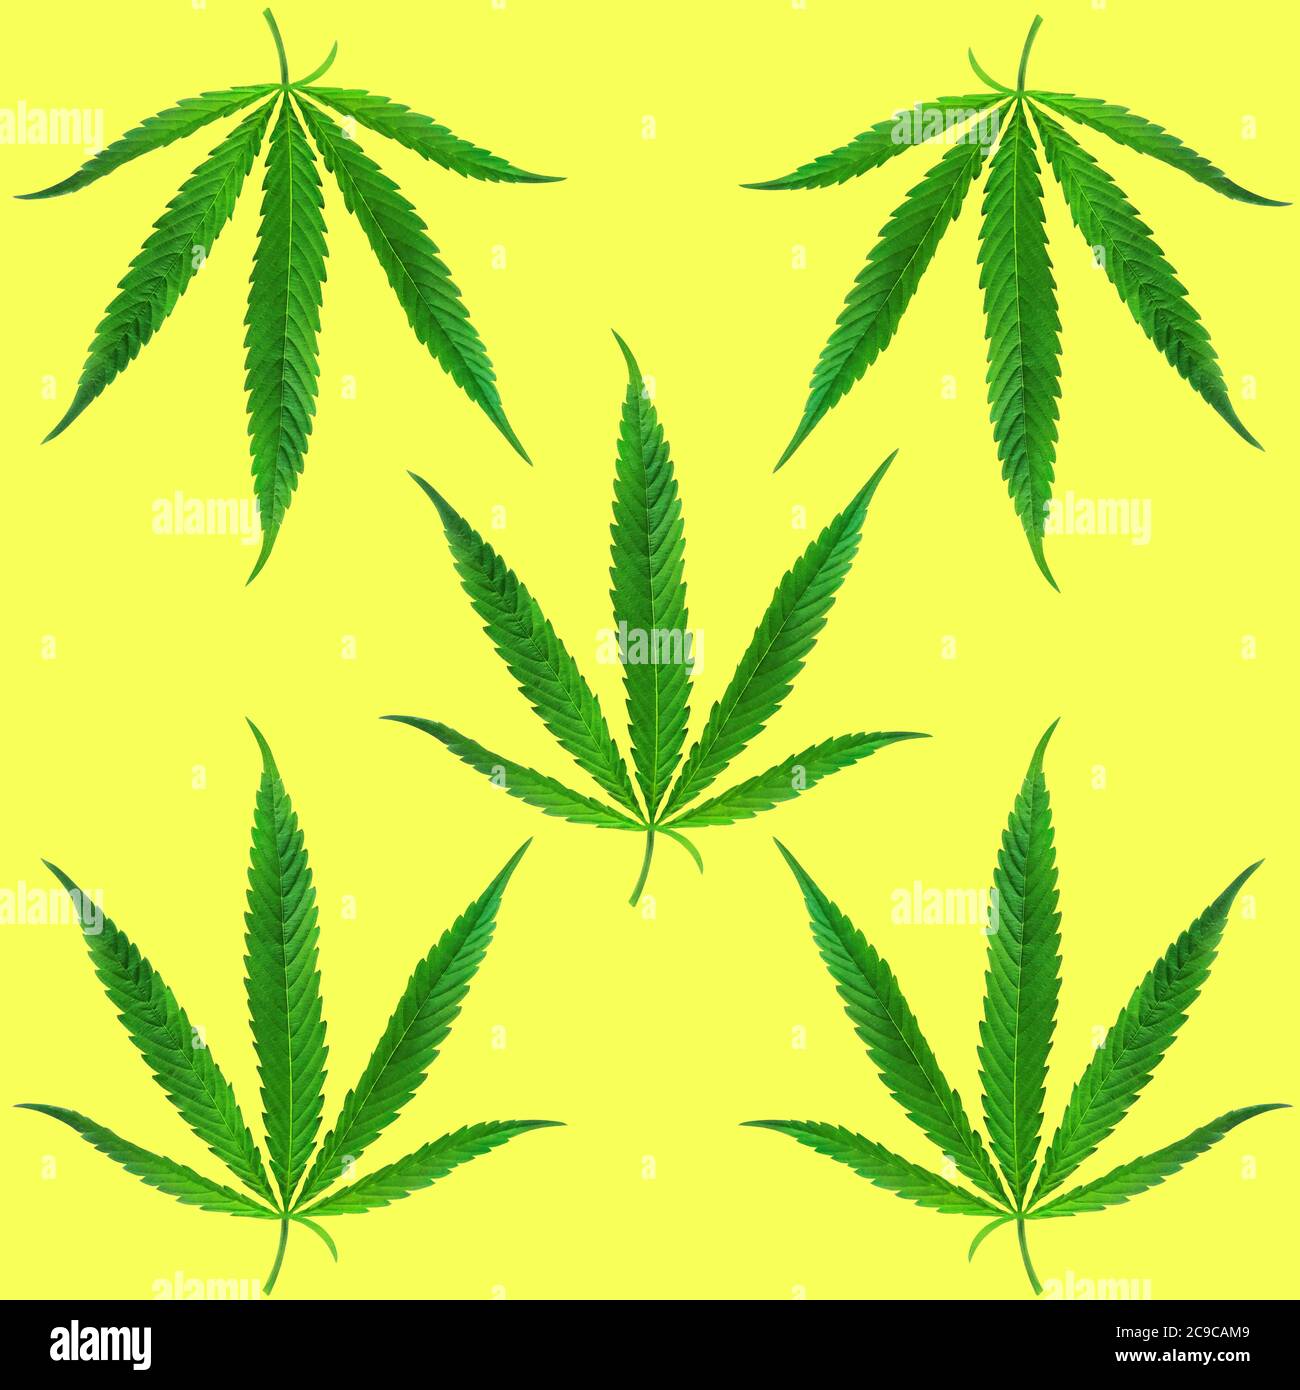 https://c8.alamy.com/comp/2C9CAM9/marijuana-cannabis-isolated-leaves-seamless-pattern-2C9CAM9.jpg